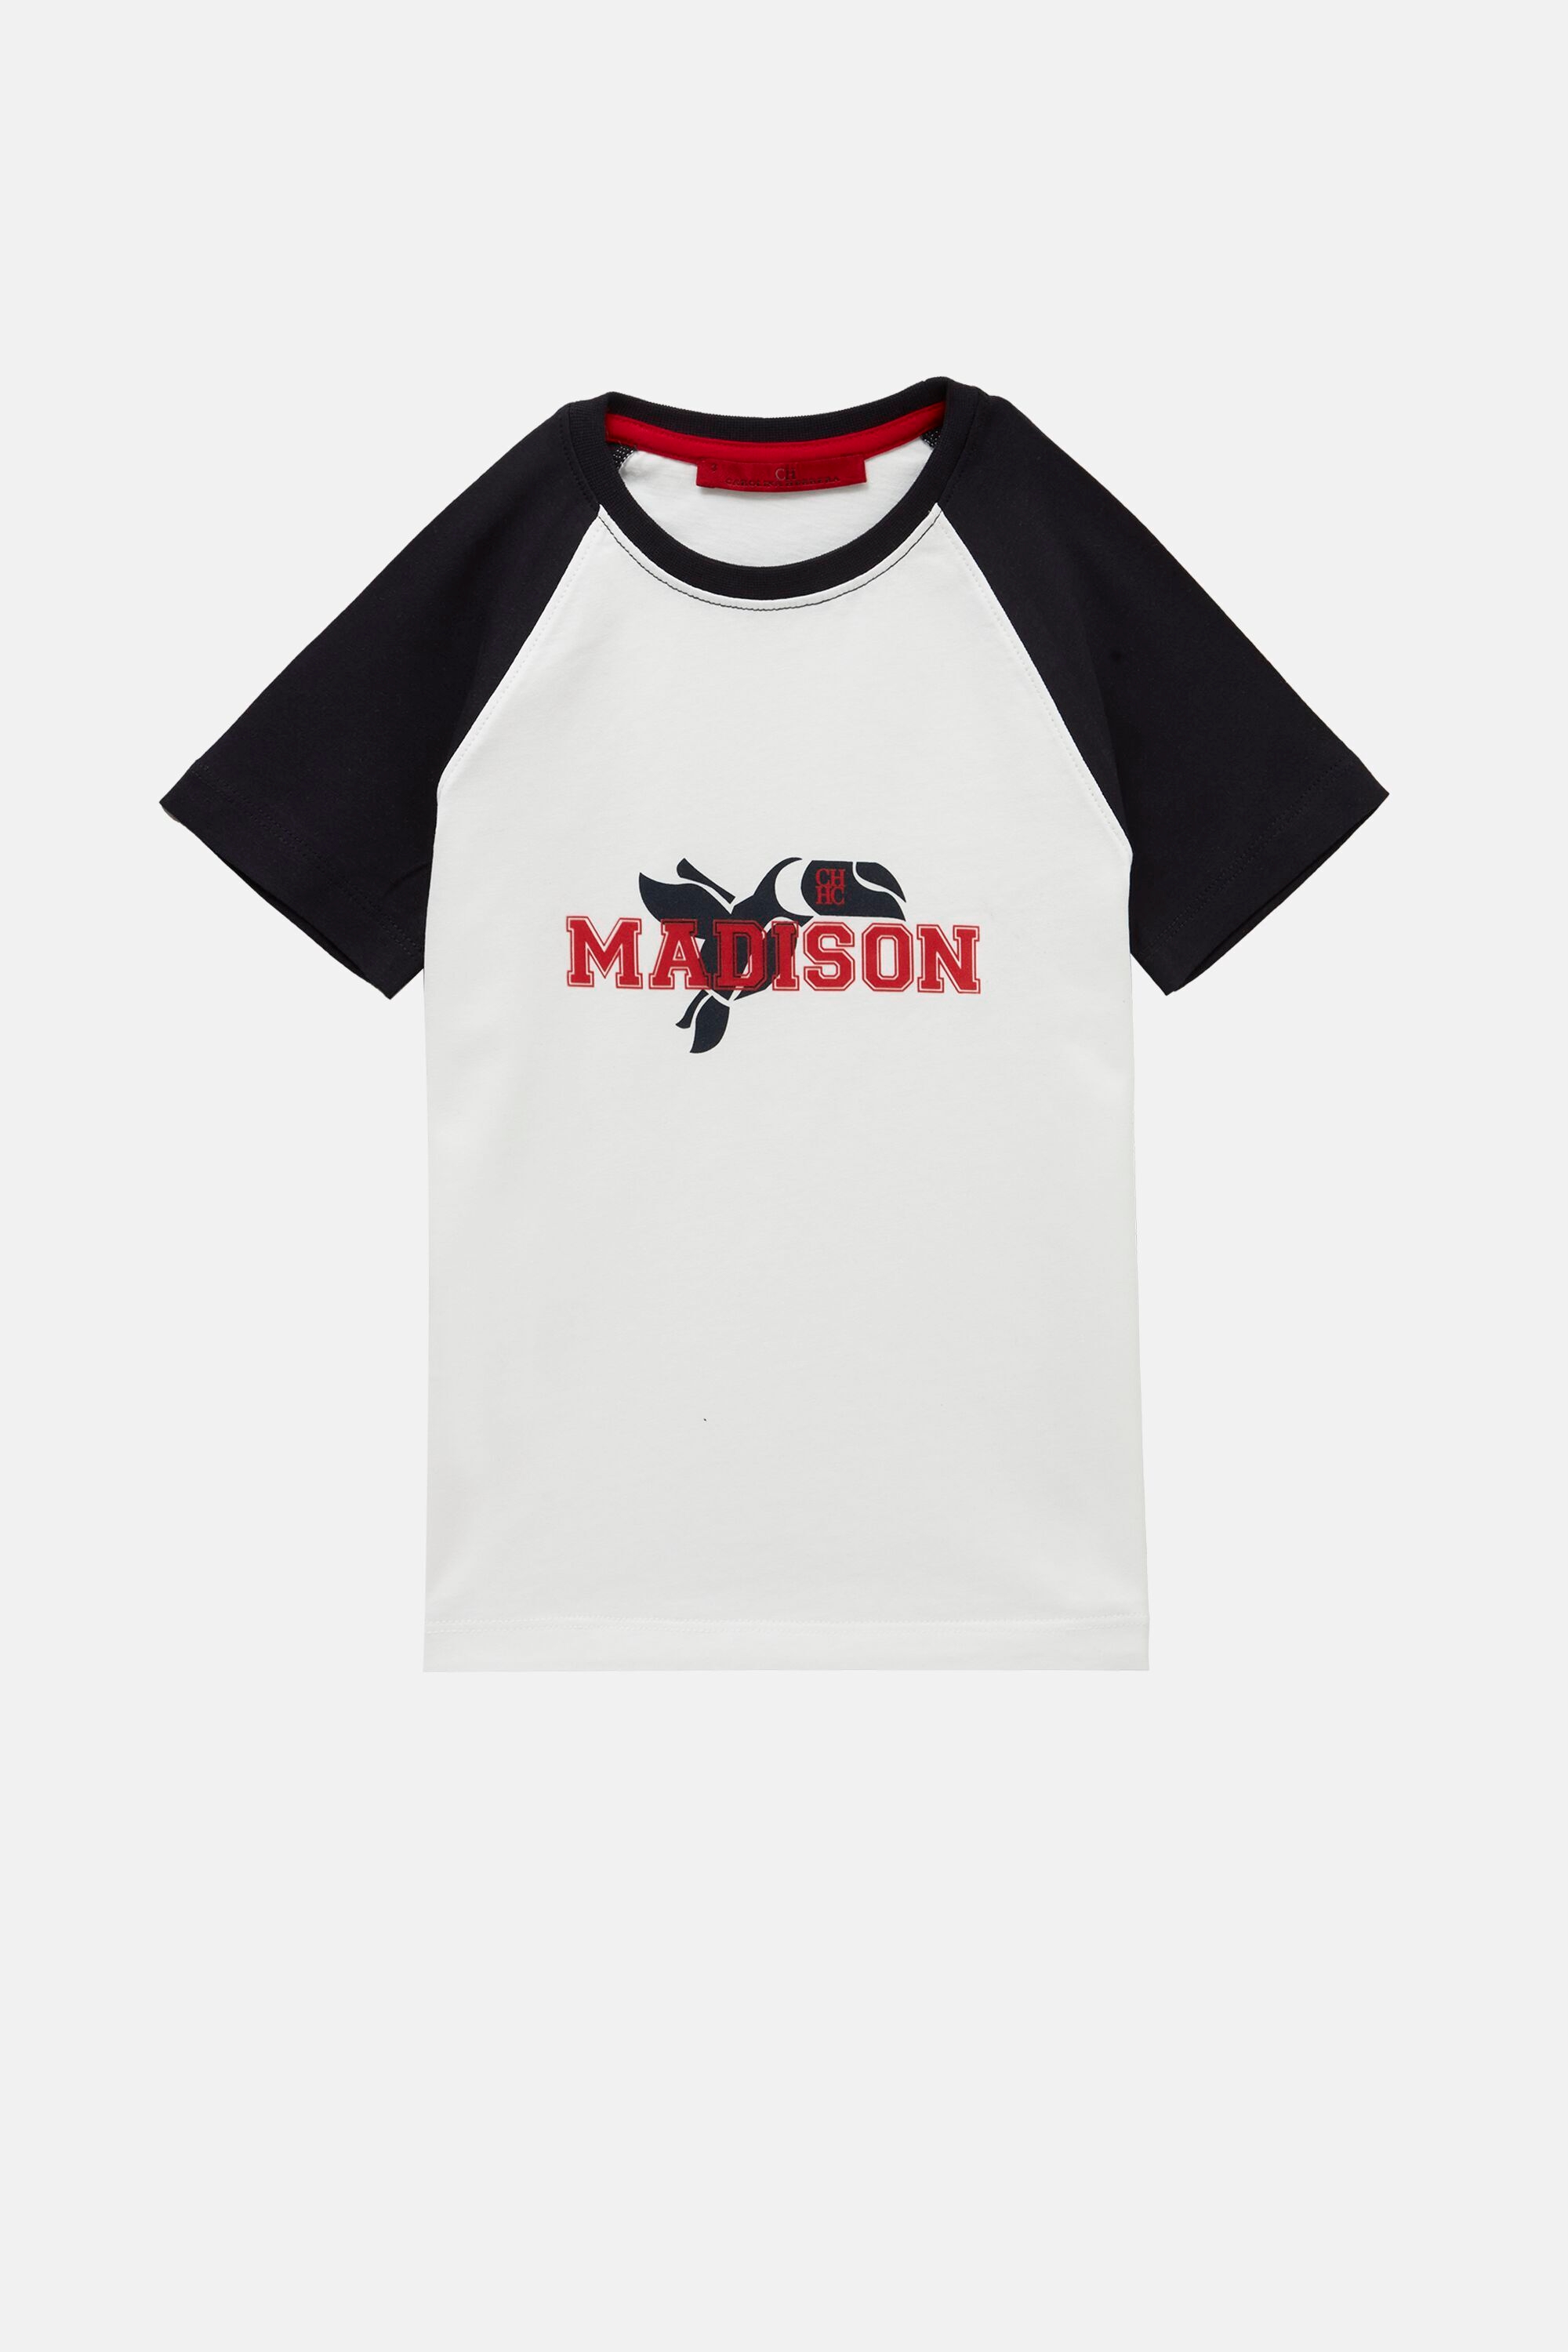 Madison toucan printed t-shirt